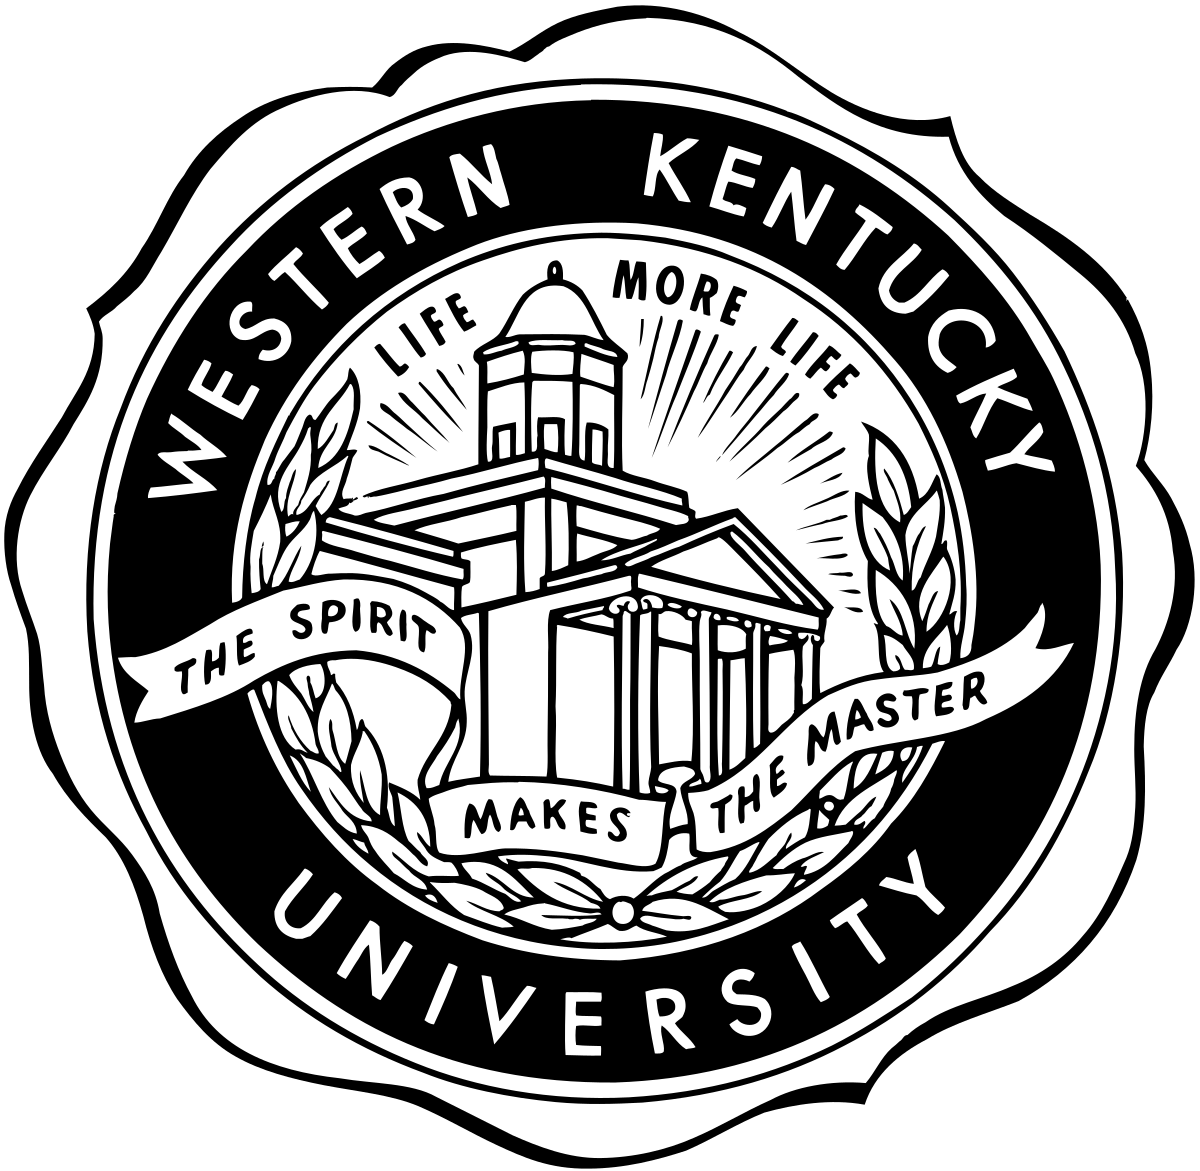 WKU Logo - Western Kentucky University